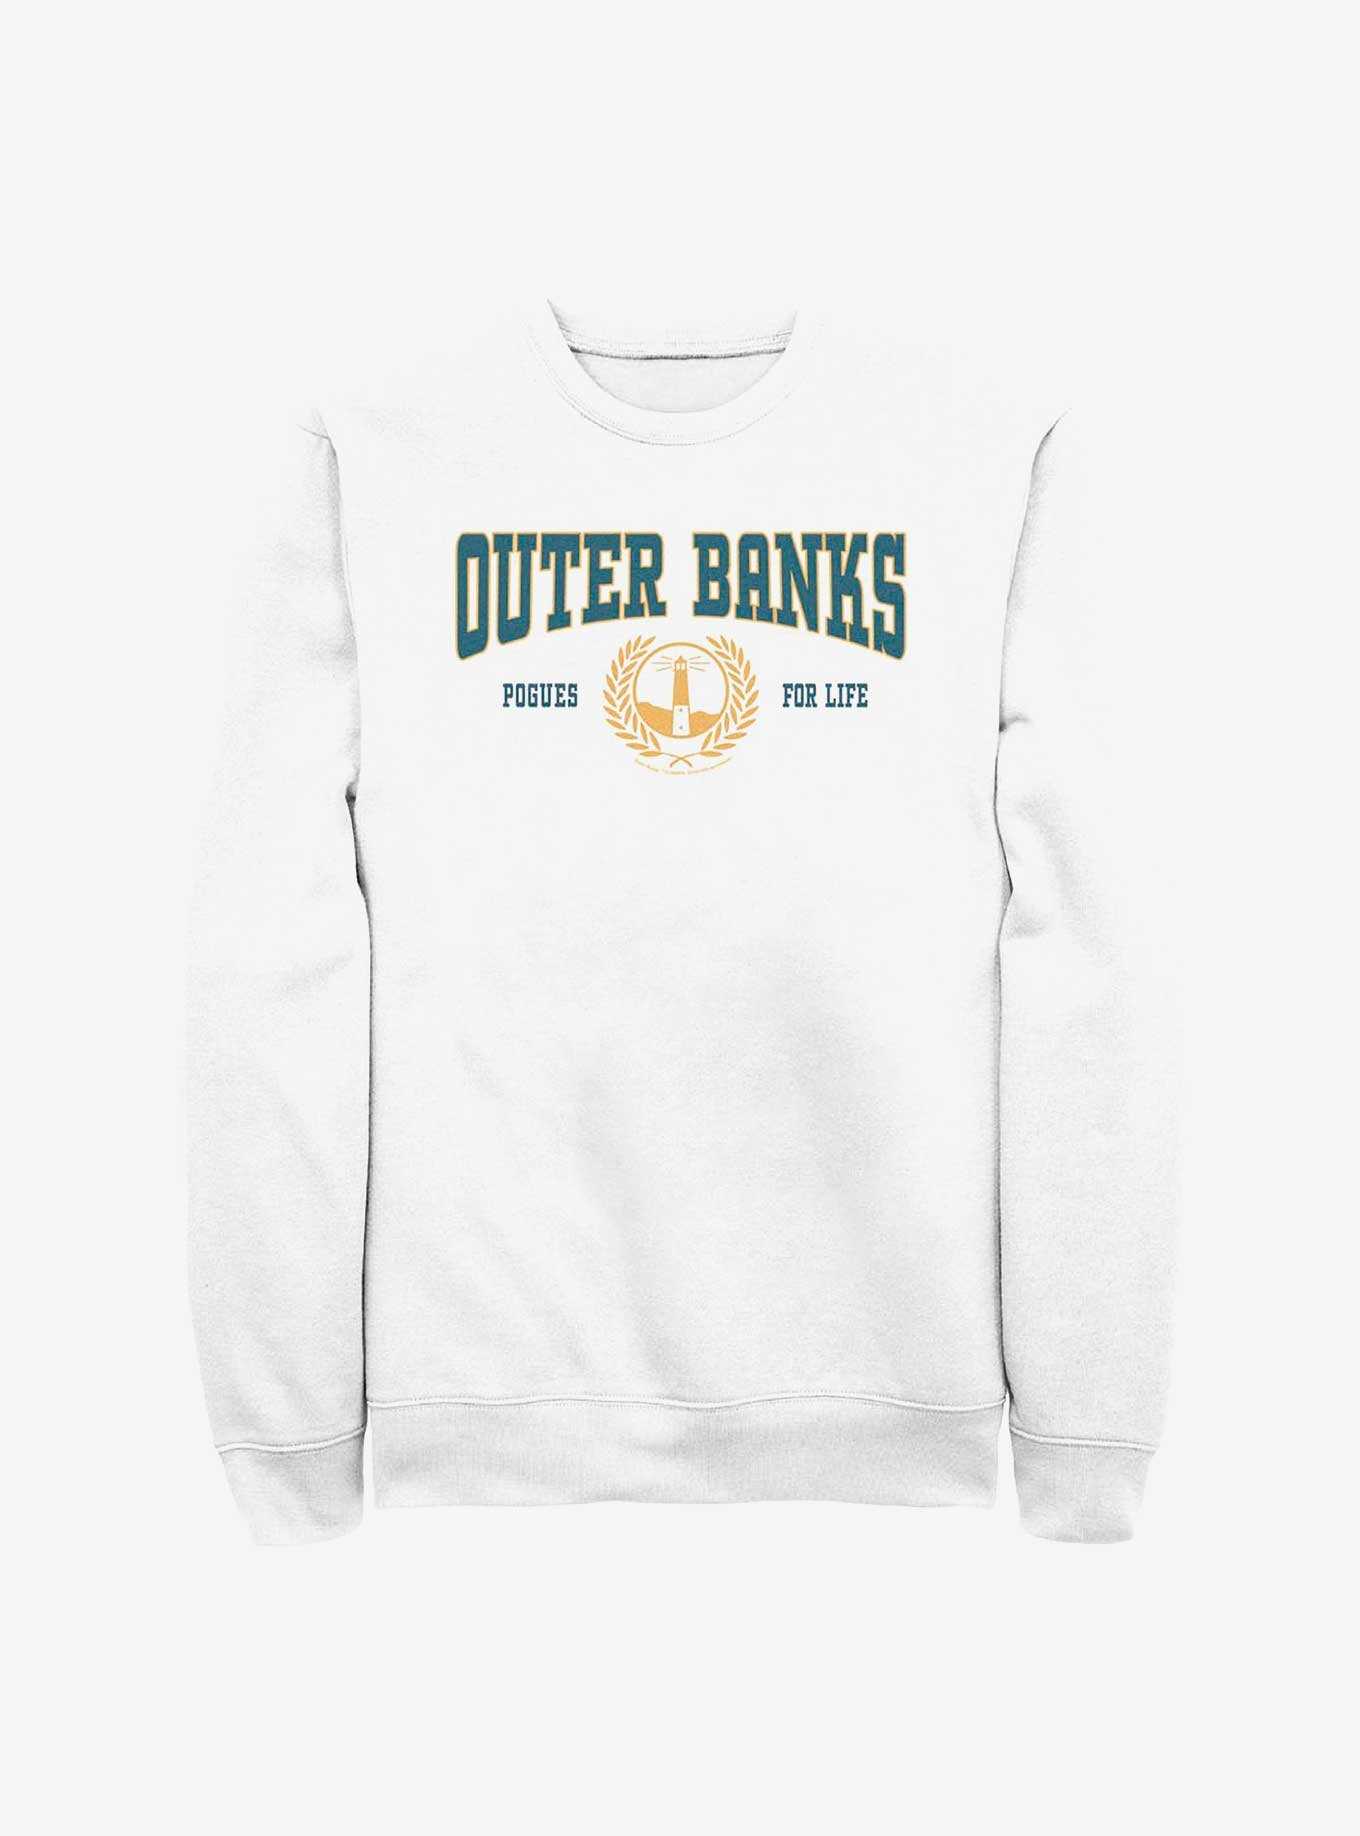 Outer Banks Collegiate Sweatshirt, , hi-res